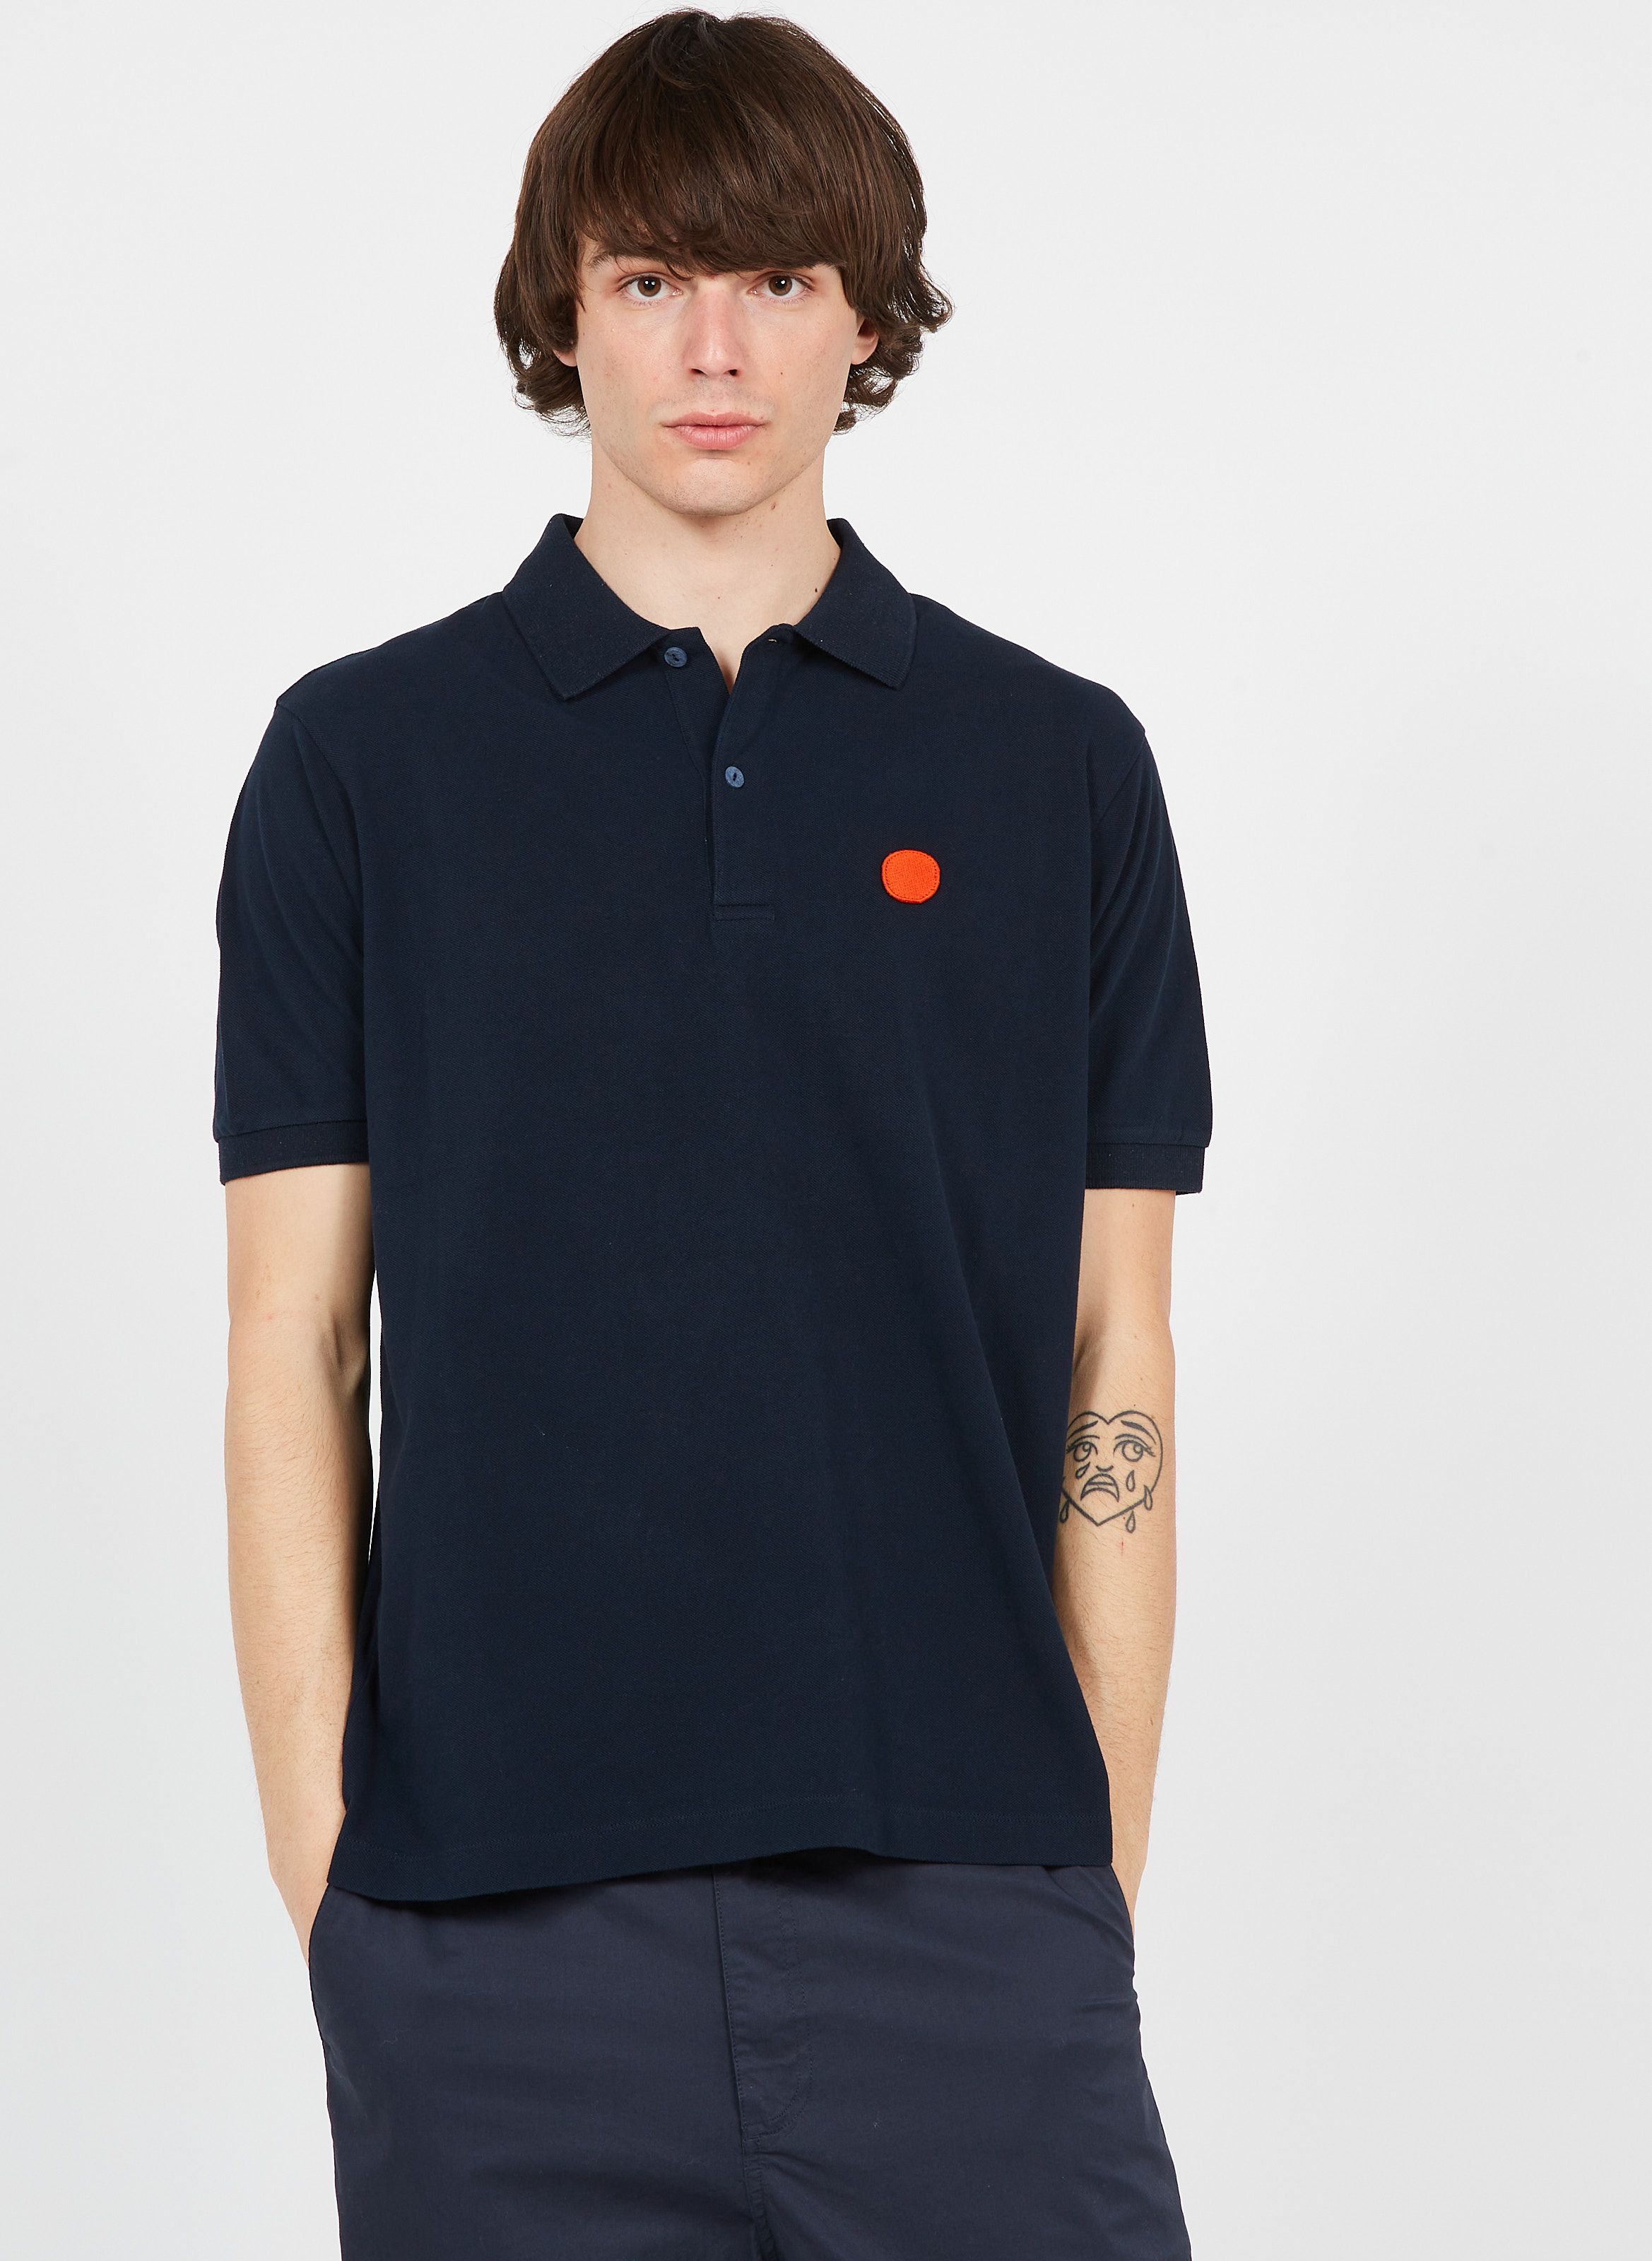 Loreak Mendian Shirt Navy Blue M discount 94% MEN FASHION Shirts & T-shirts NO STYLE 